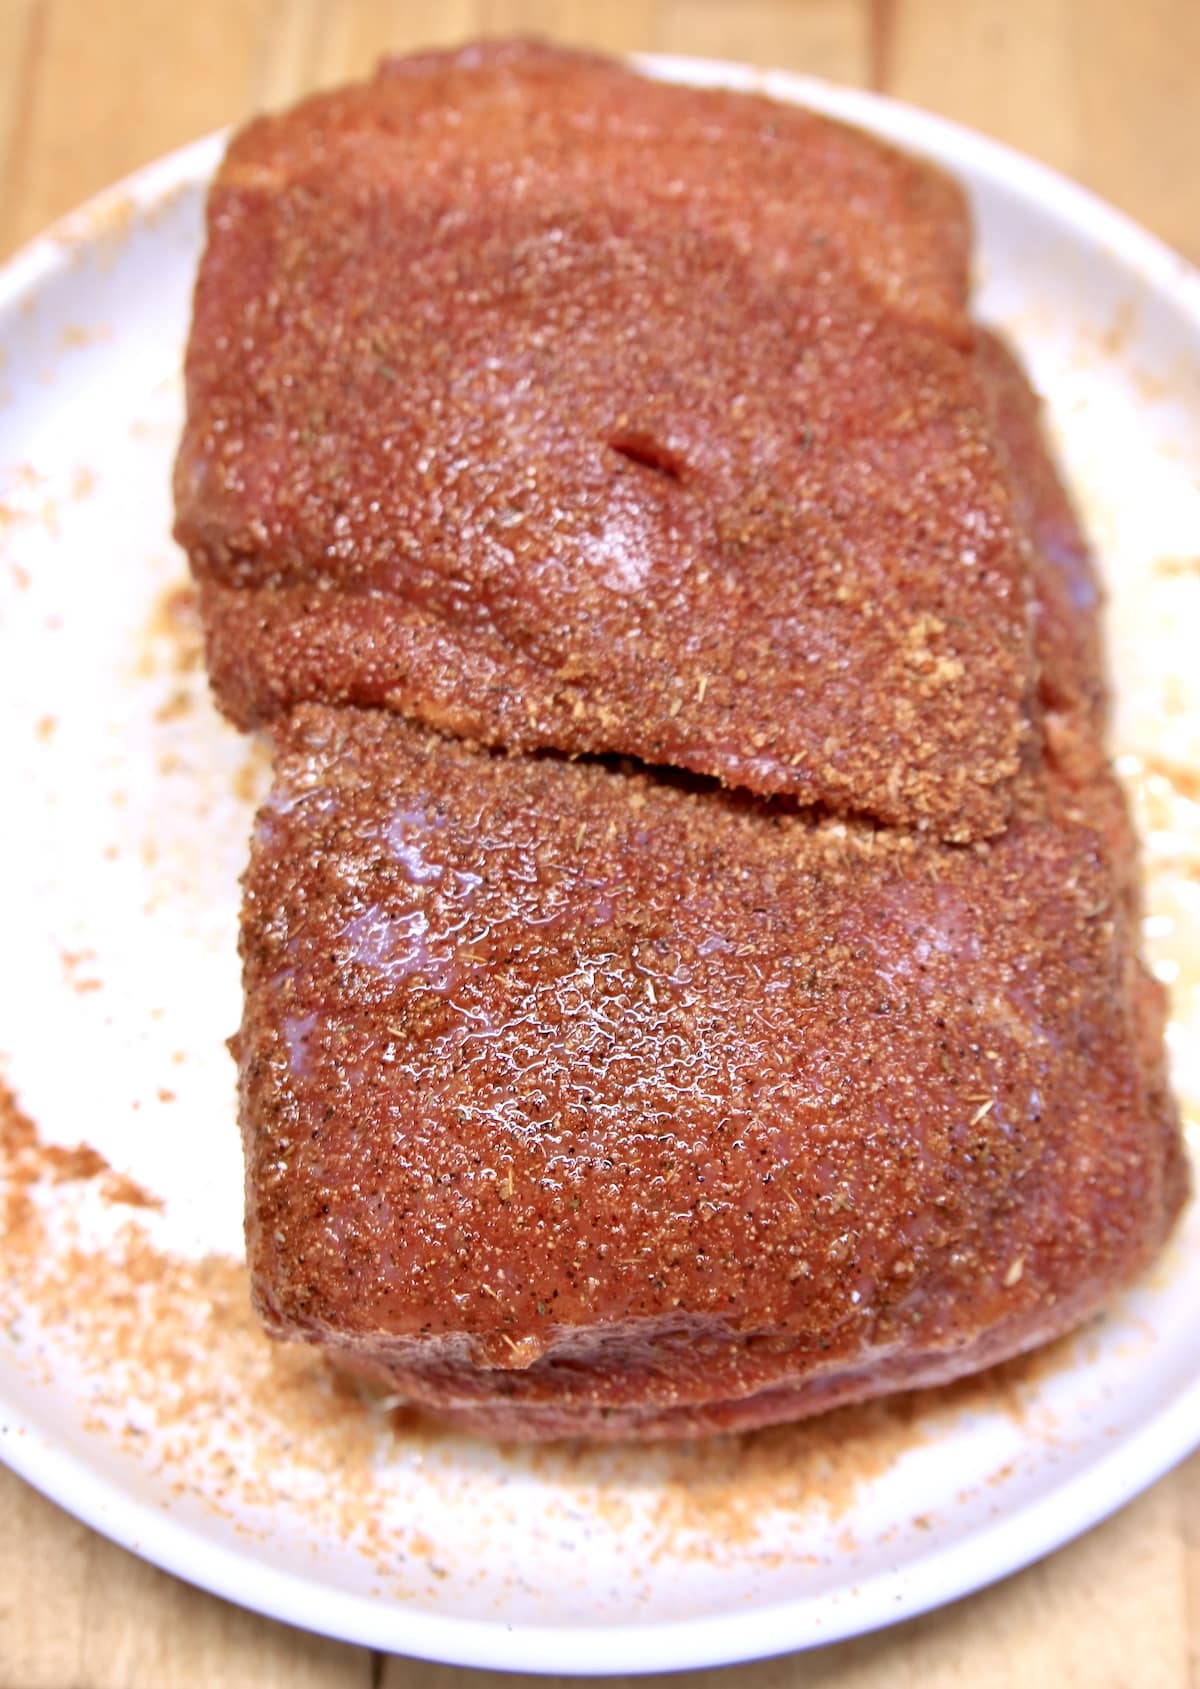 Raw venison roast seasoned with dry rub on a sheet pan.